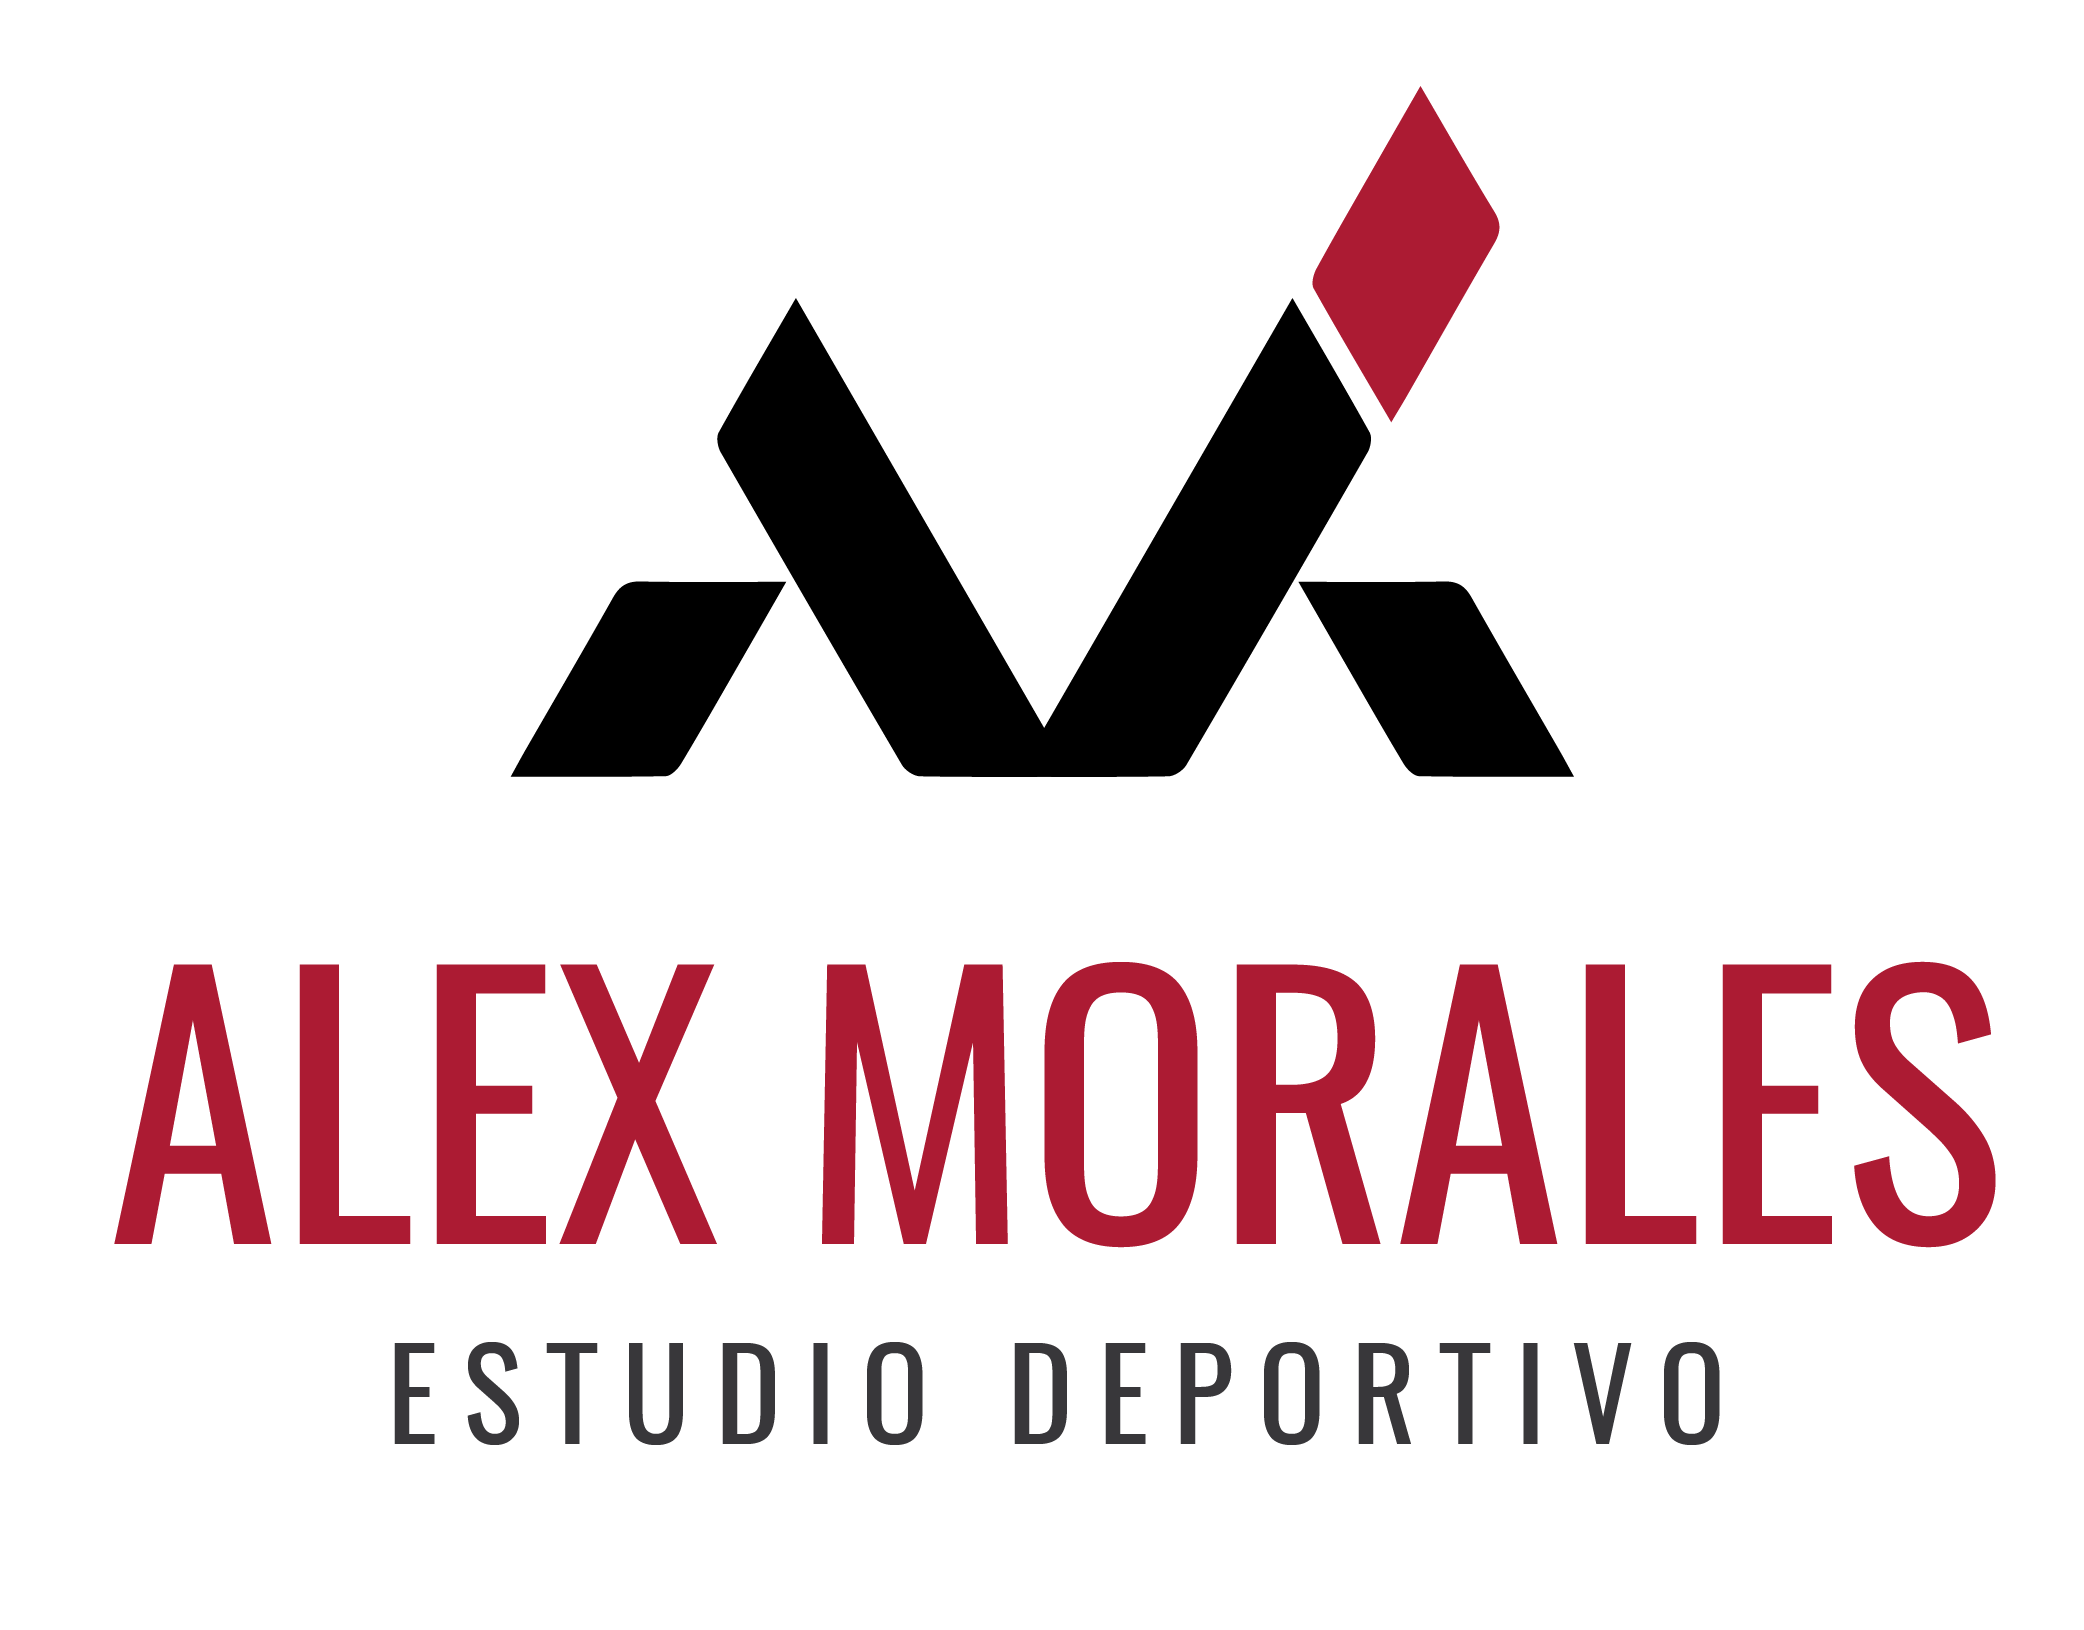 Alex Morales